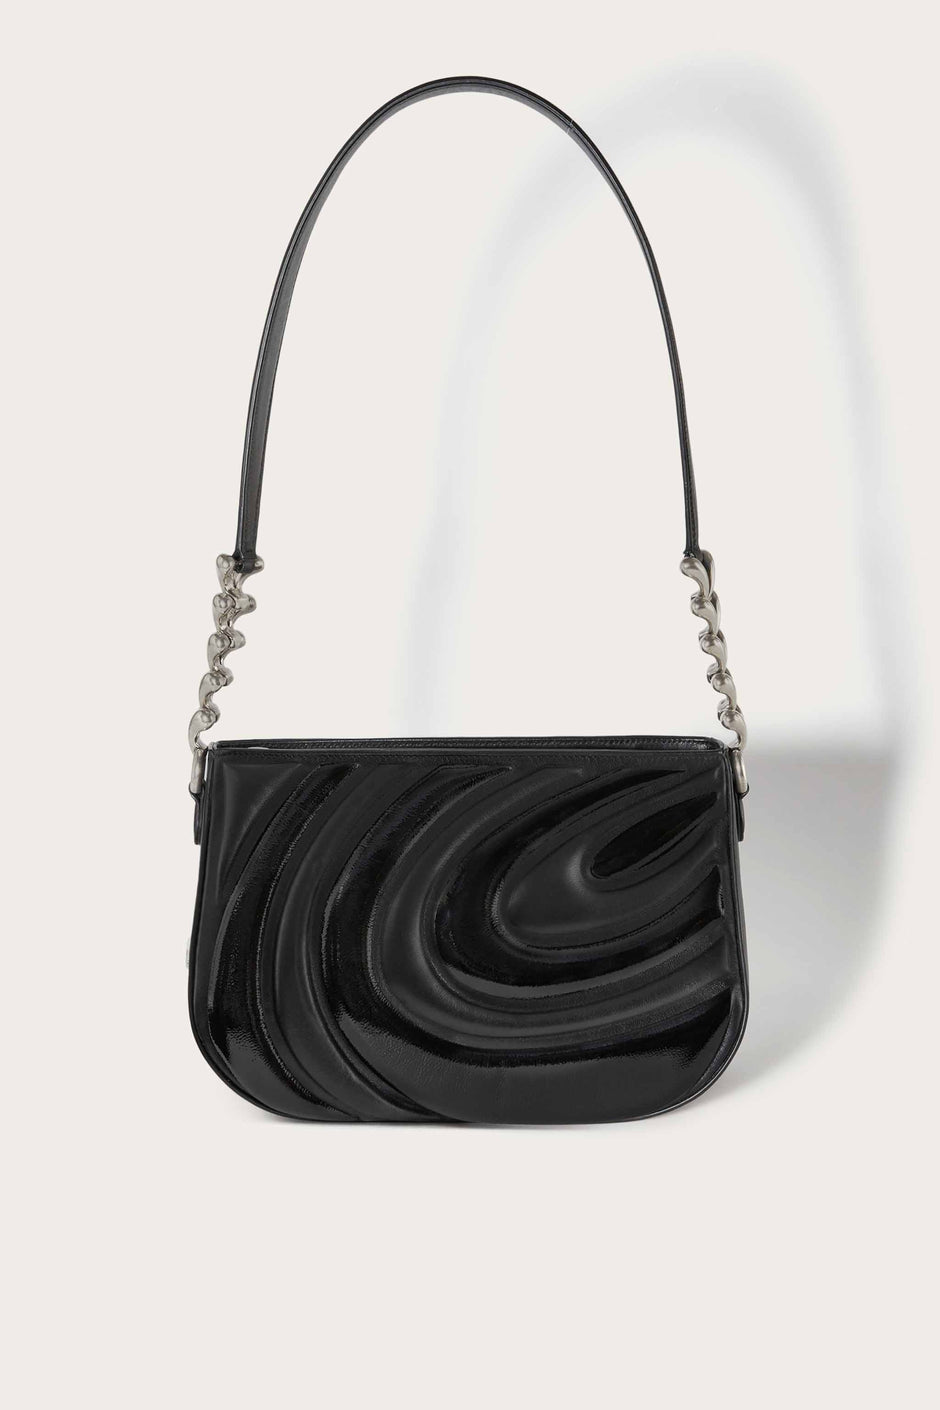 Pucci bag: italian brand bag and more | Pucci